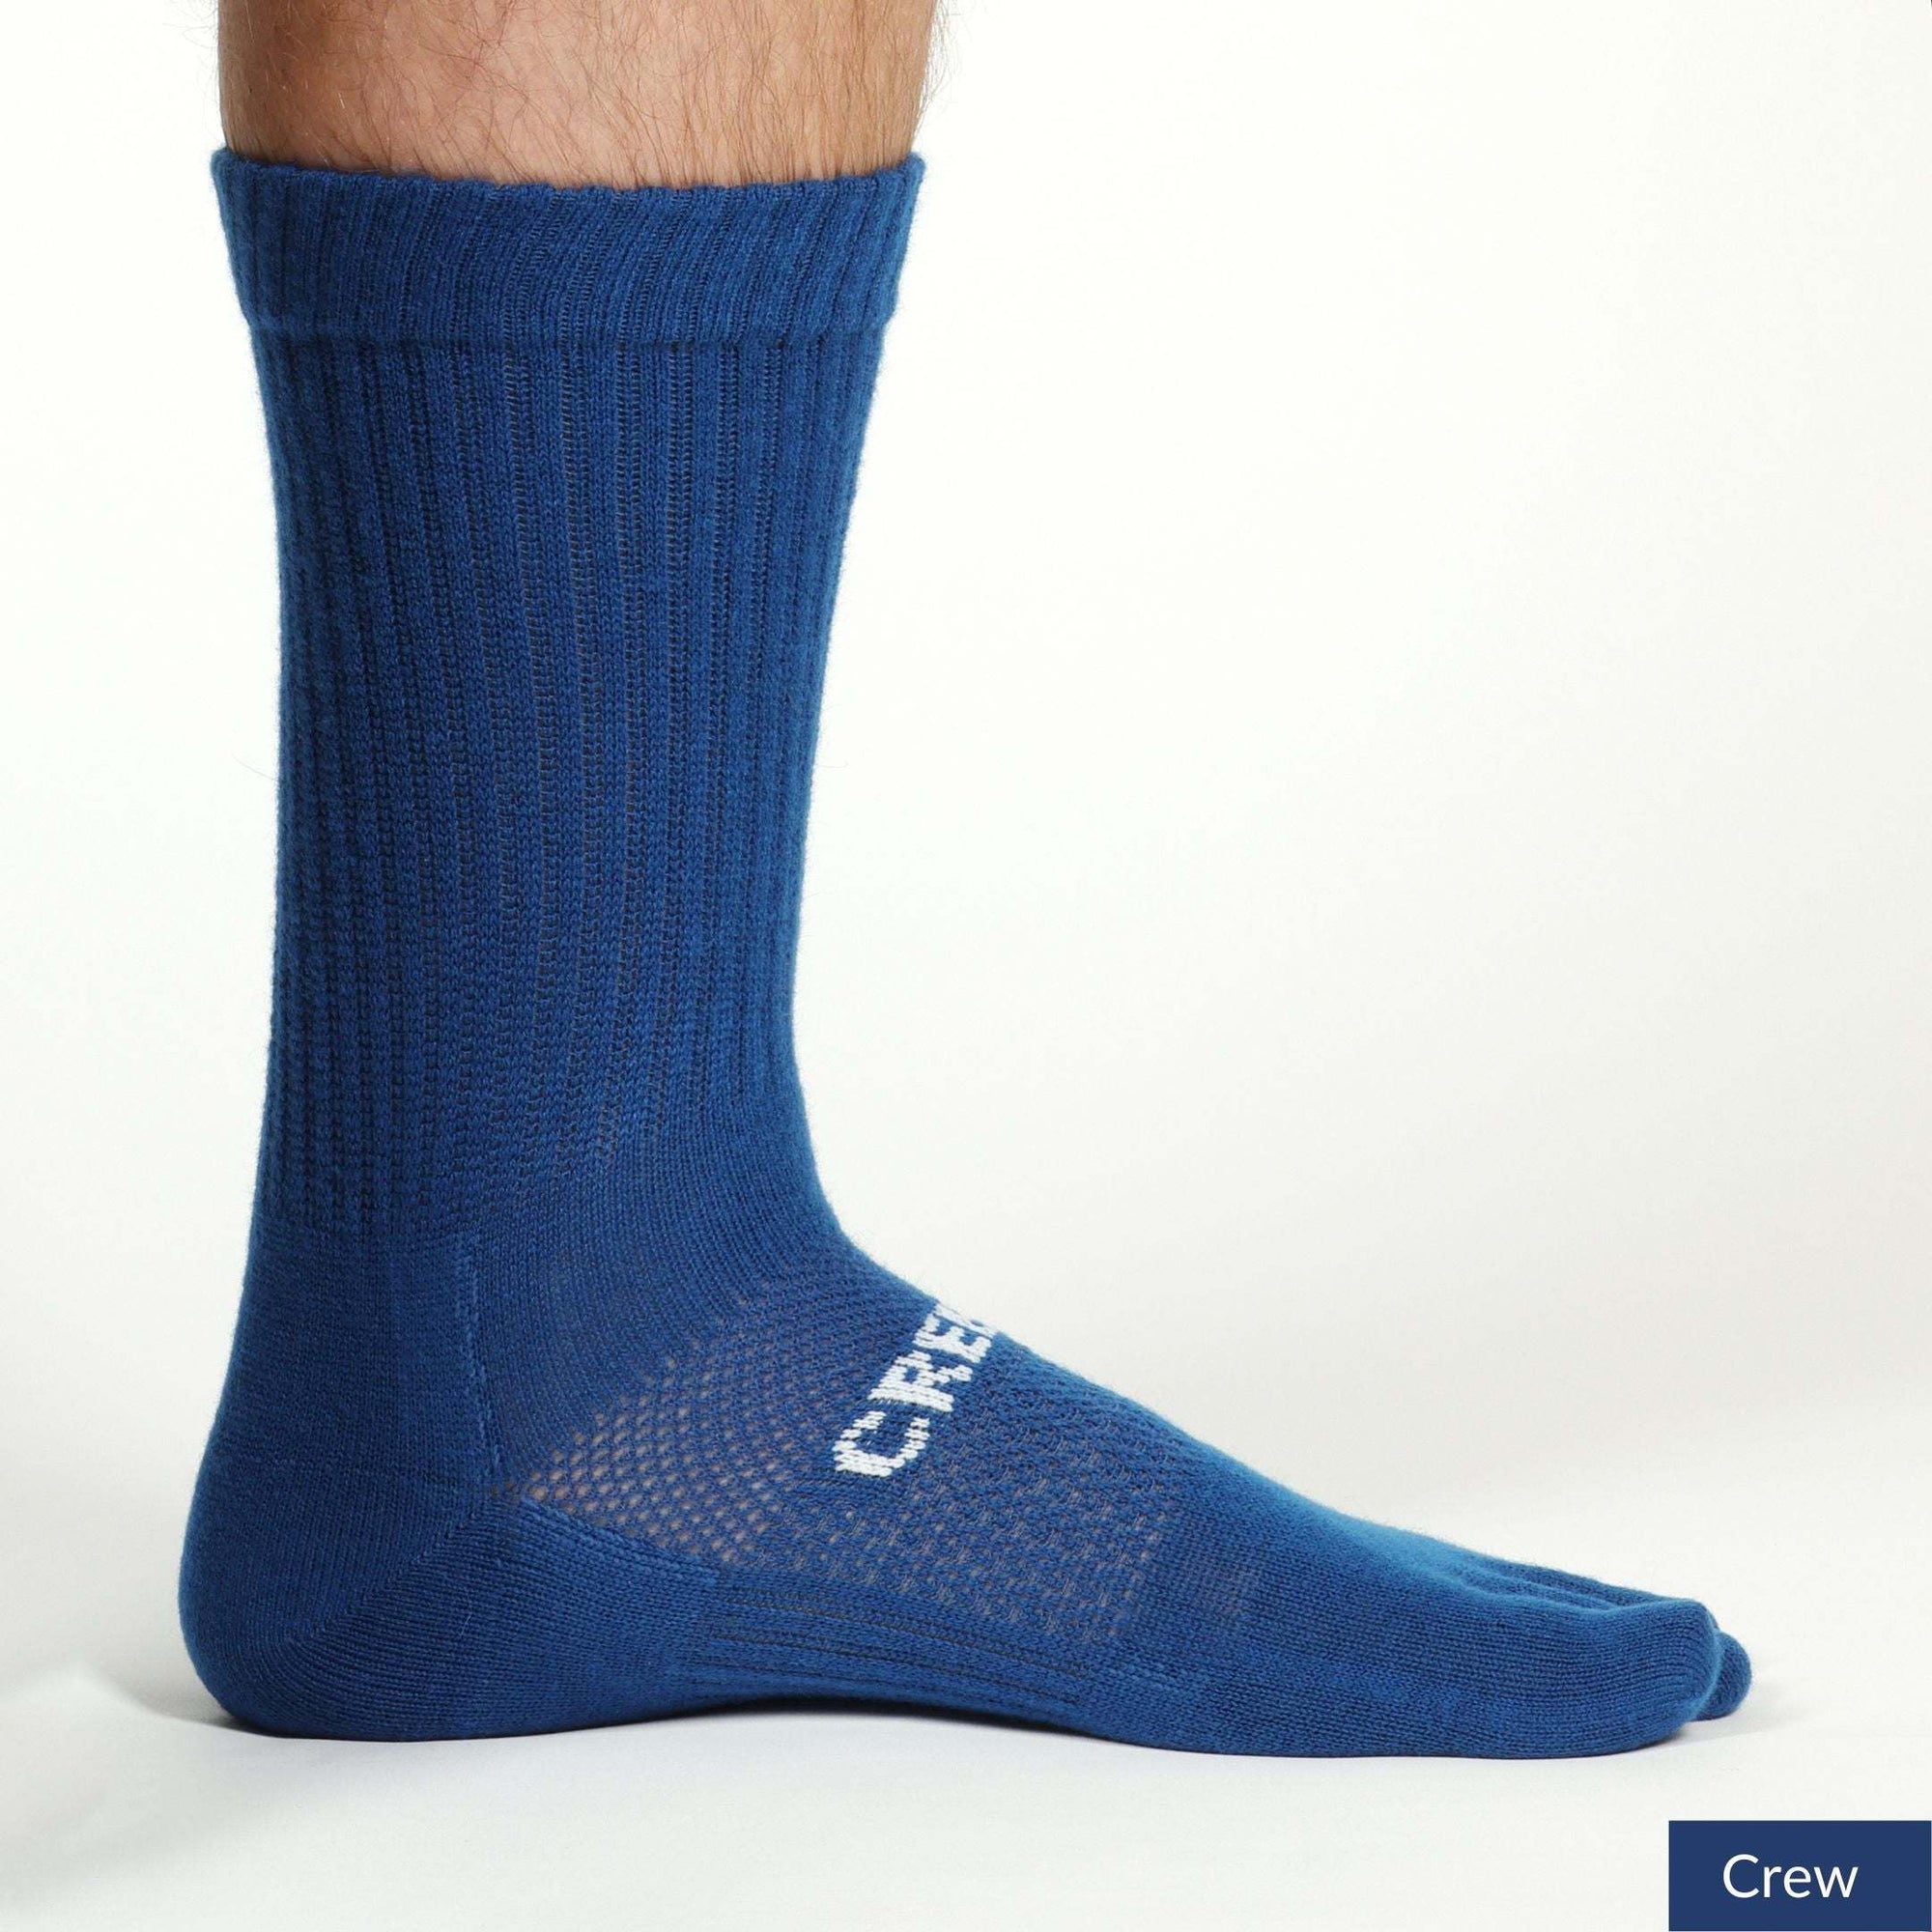 creepers socks merino toe socks in blue crew